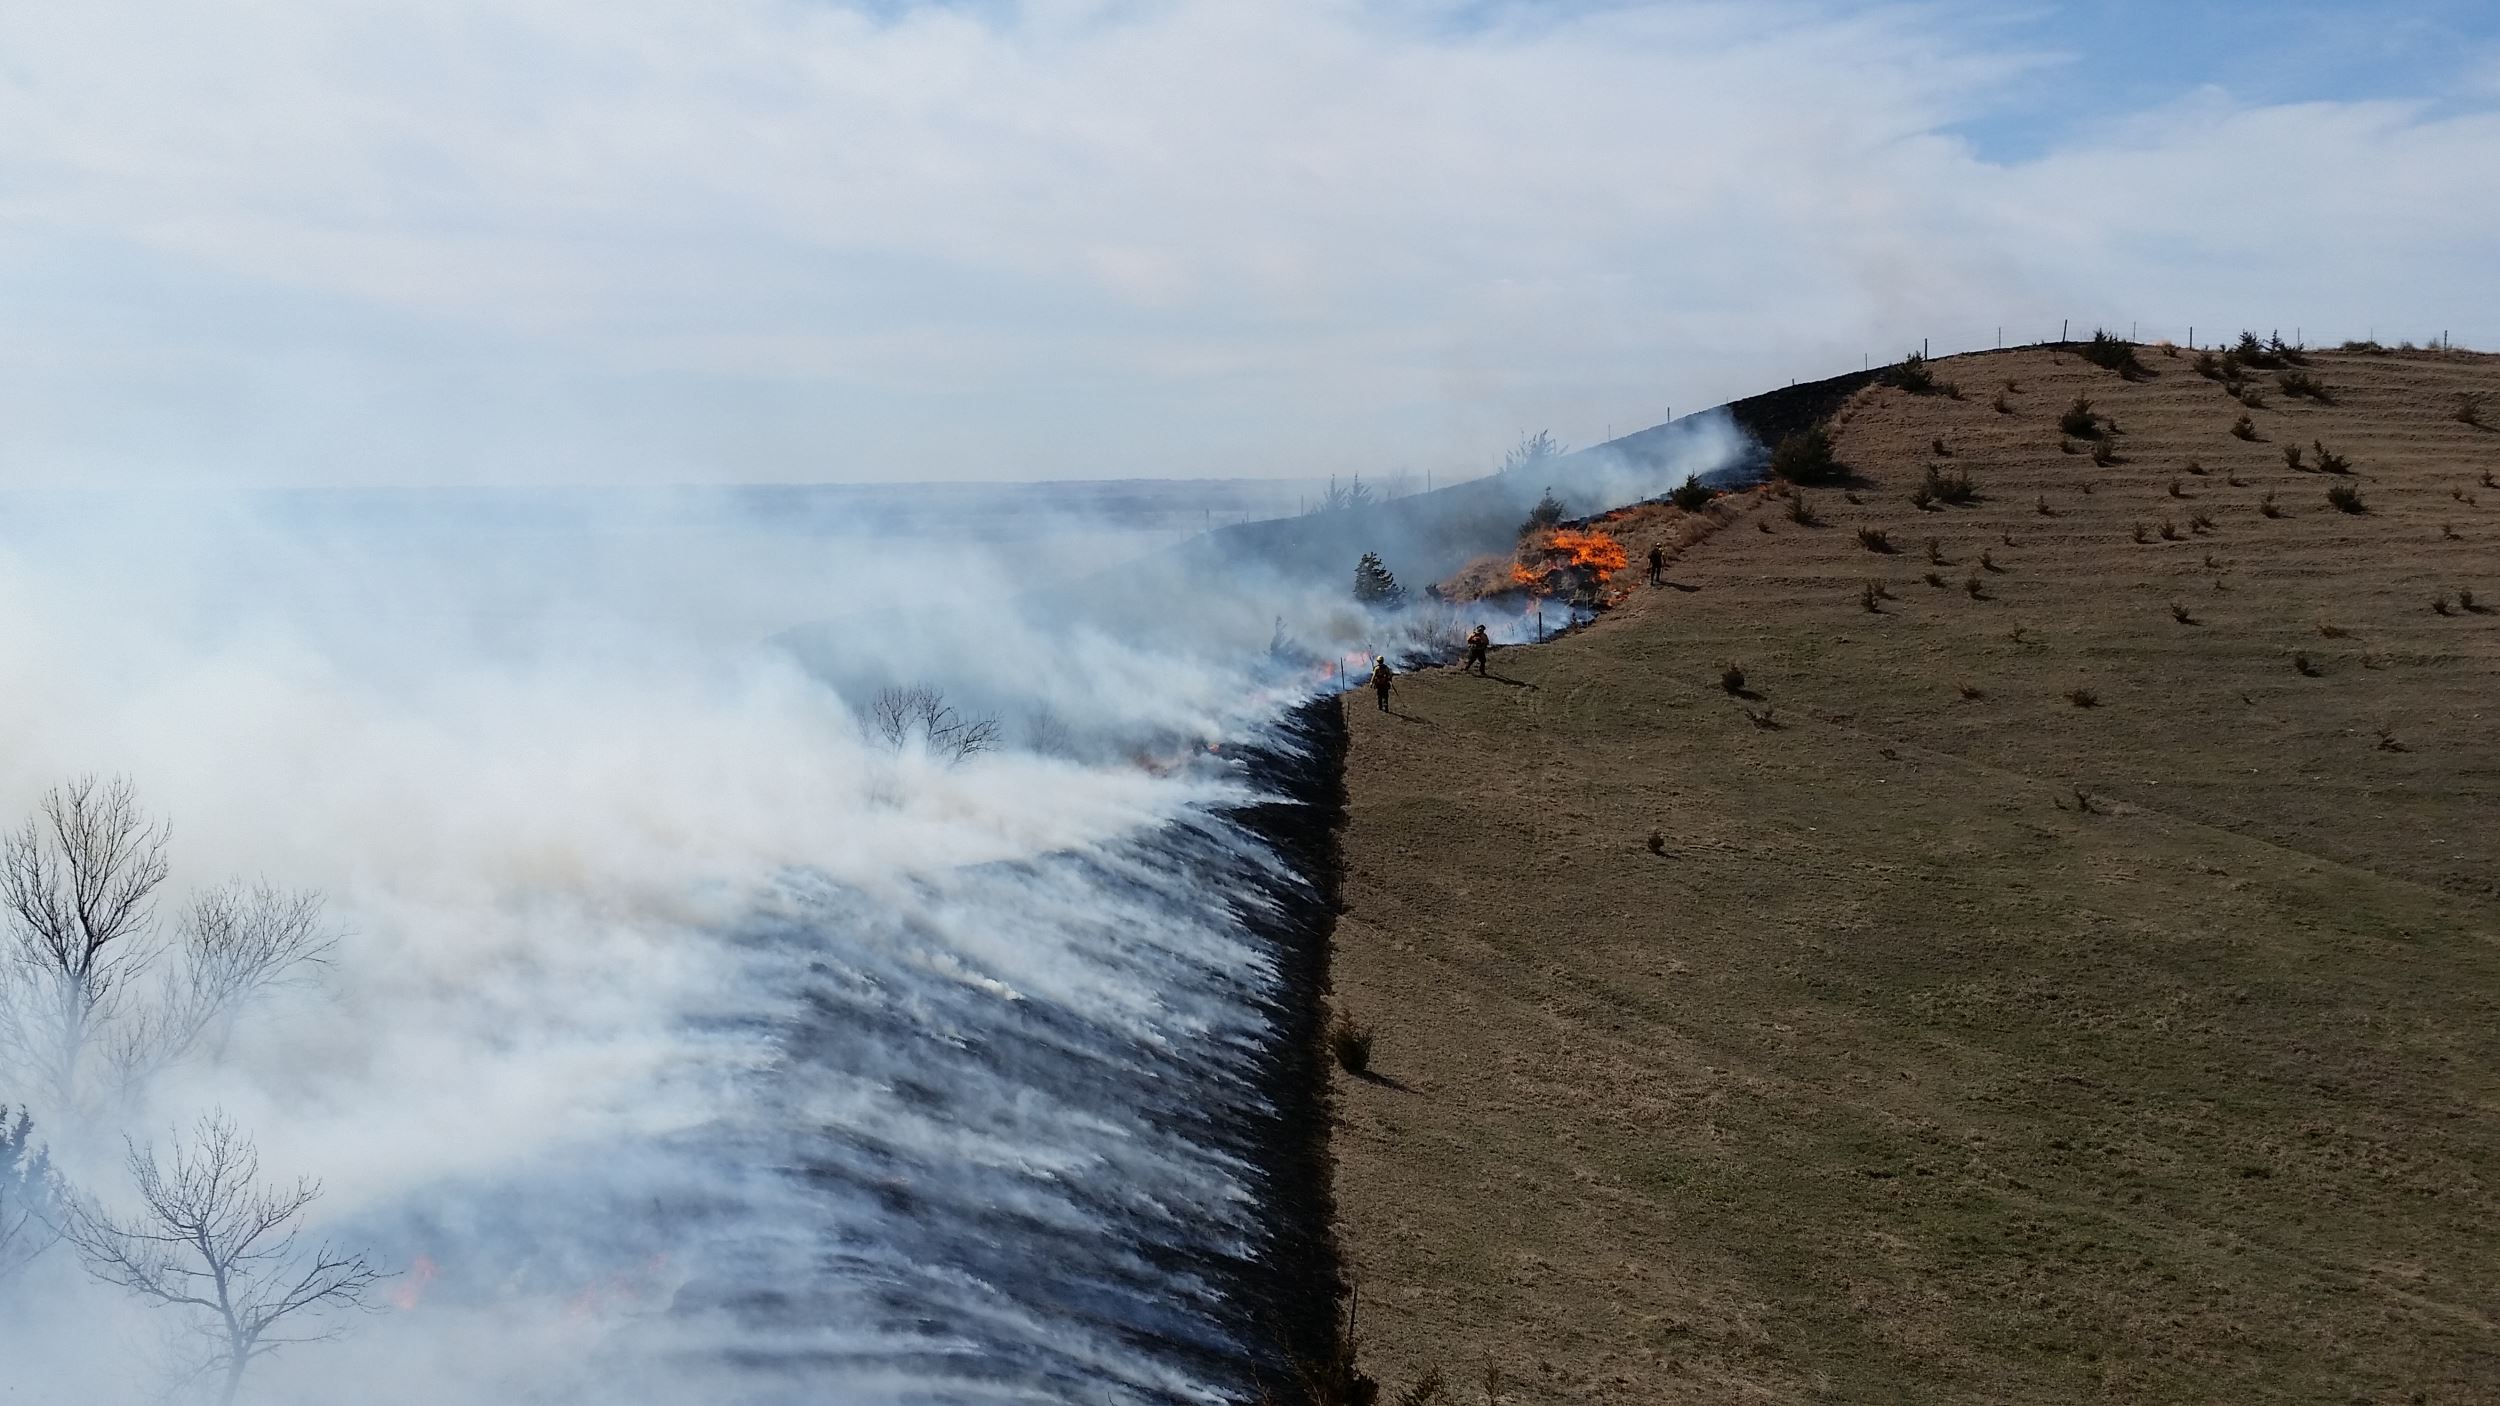 Earth, Wind and Fire: INHF's spring burn season